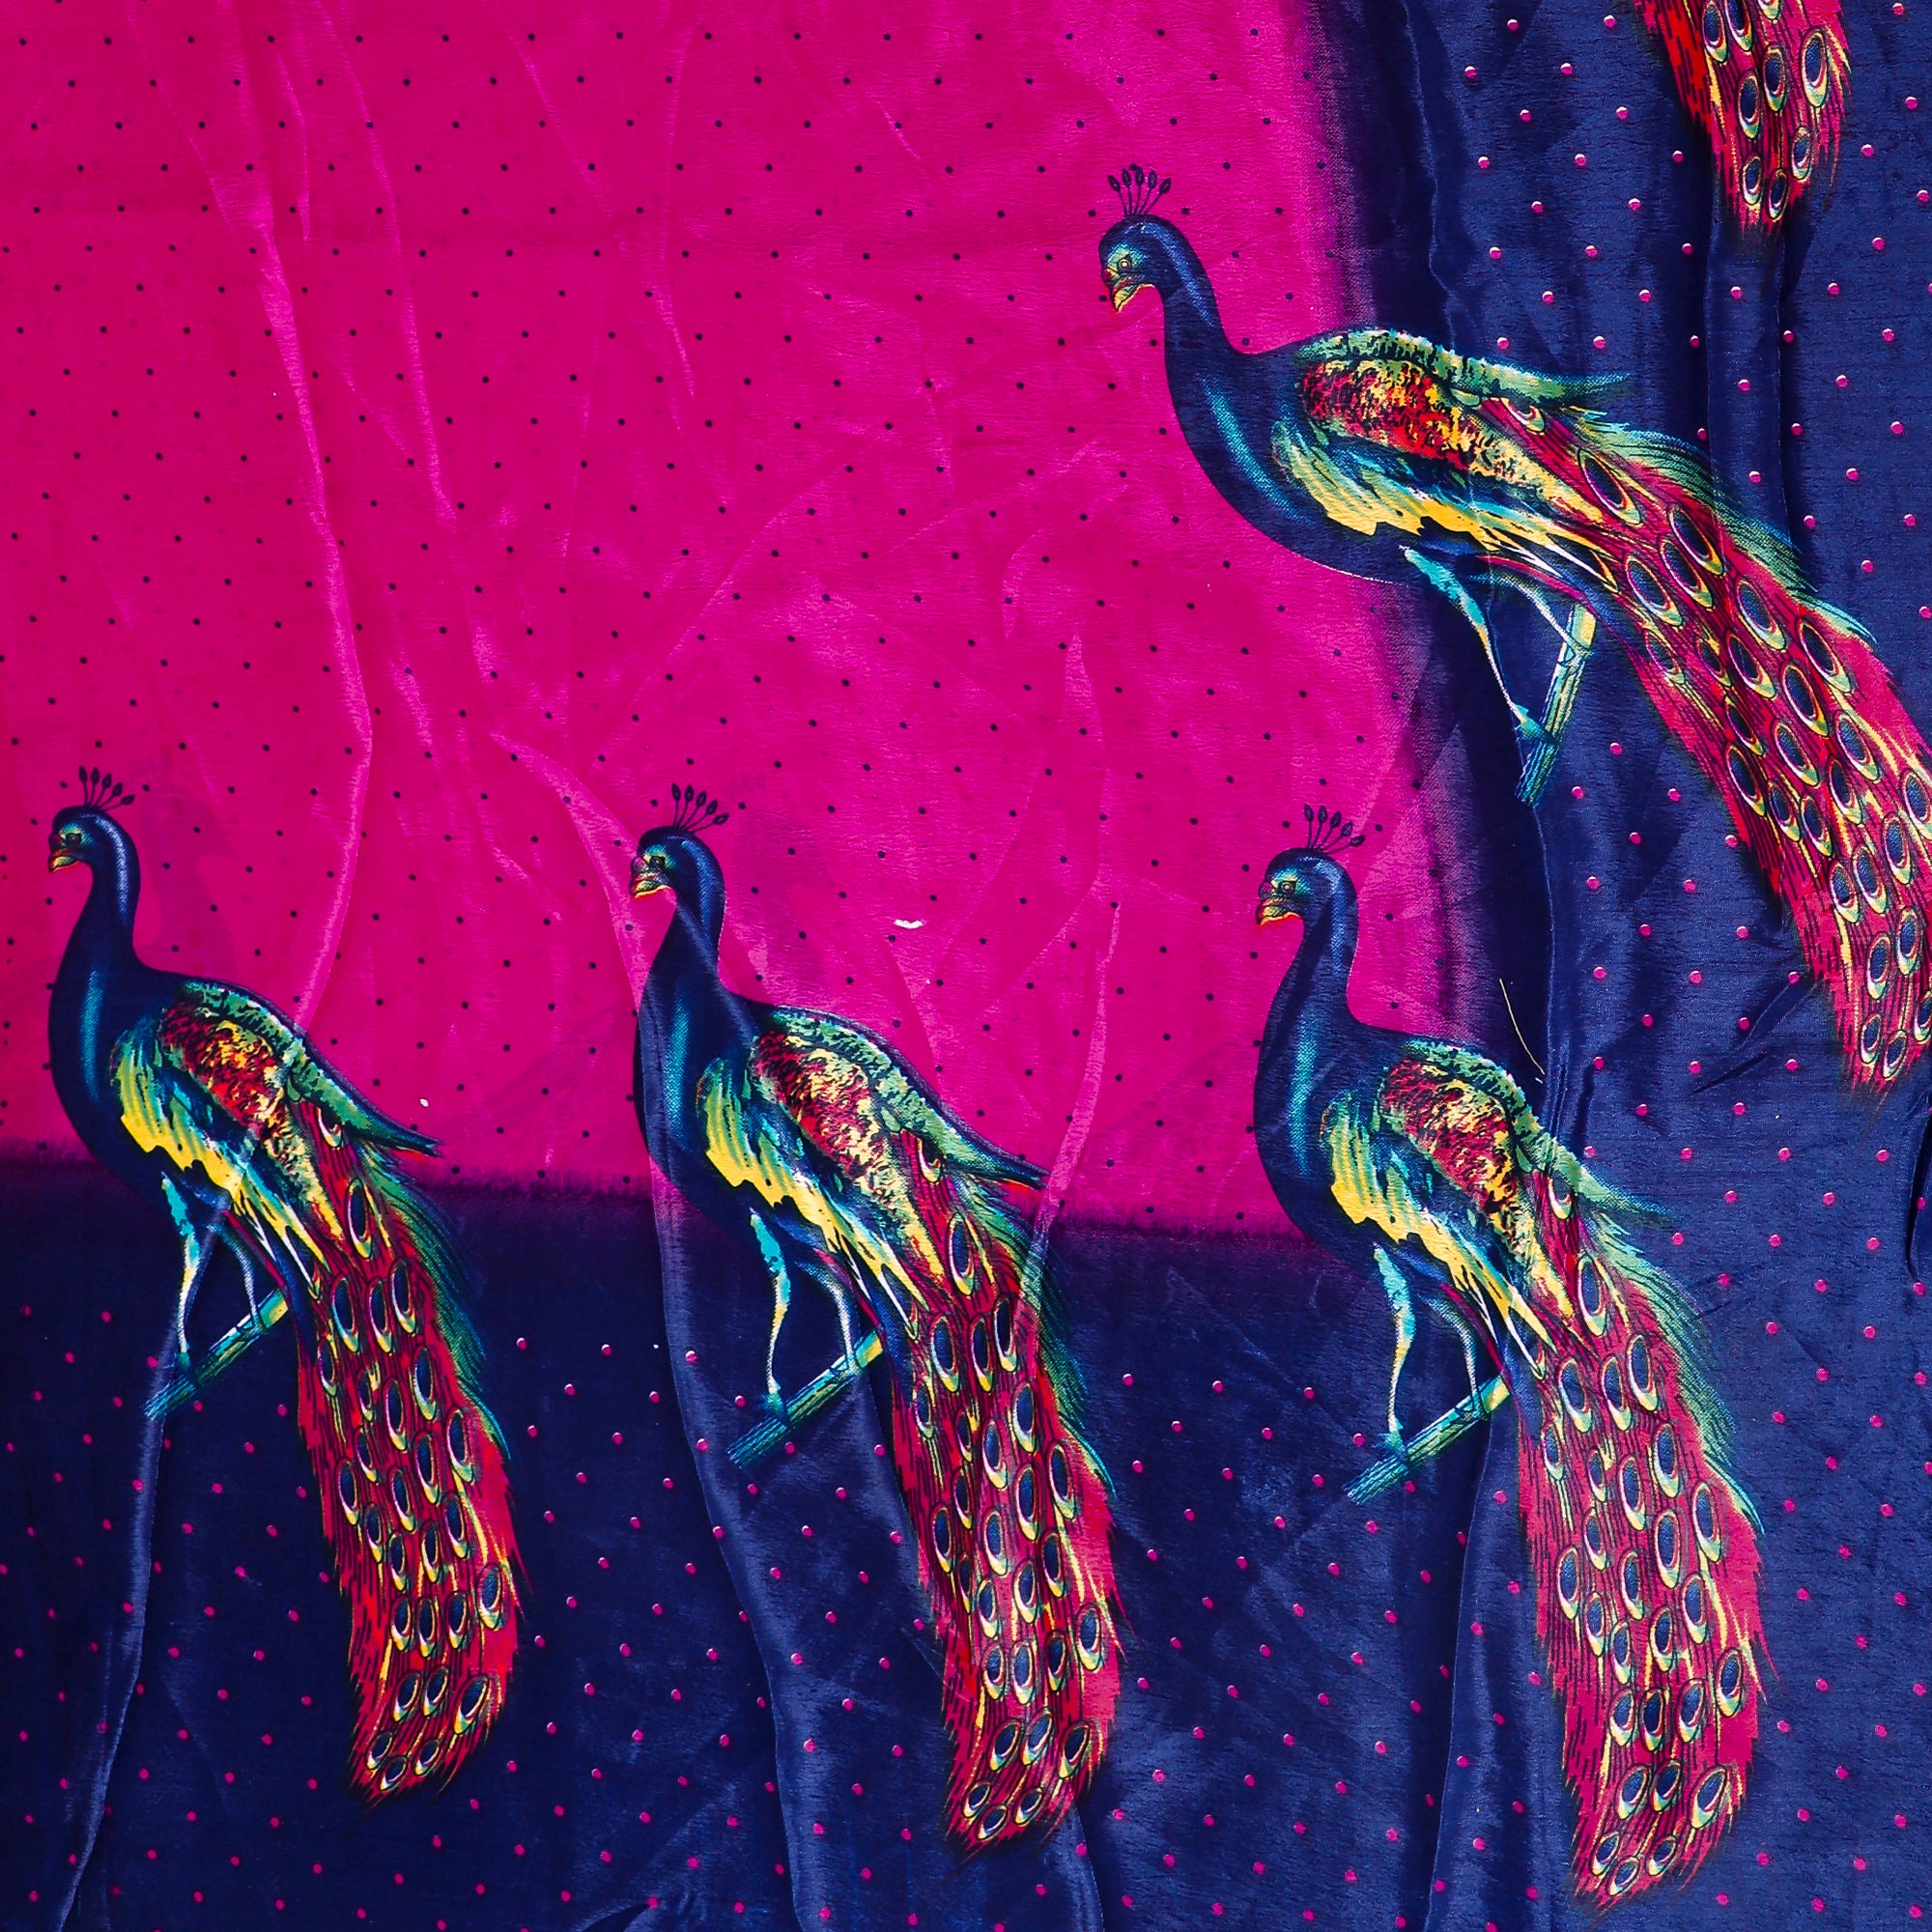 Lot of 10 Piece, kusumhandicrafts Silk Sari Fabric used Bundle for Nuno Felting Wholesale Lot of Vintage 100% Silk Saree Dressmaking Craft